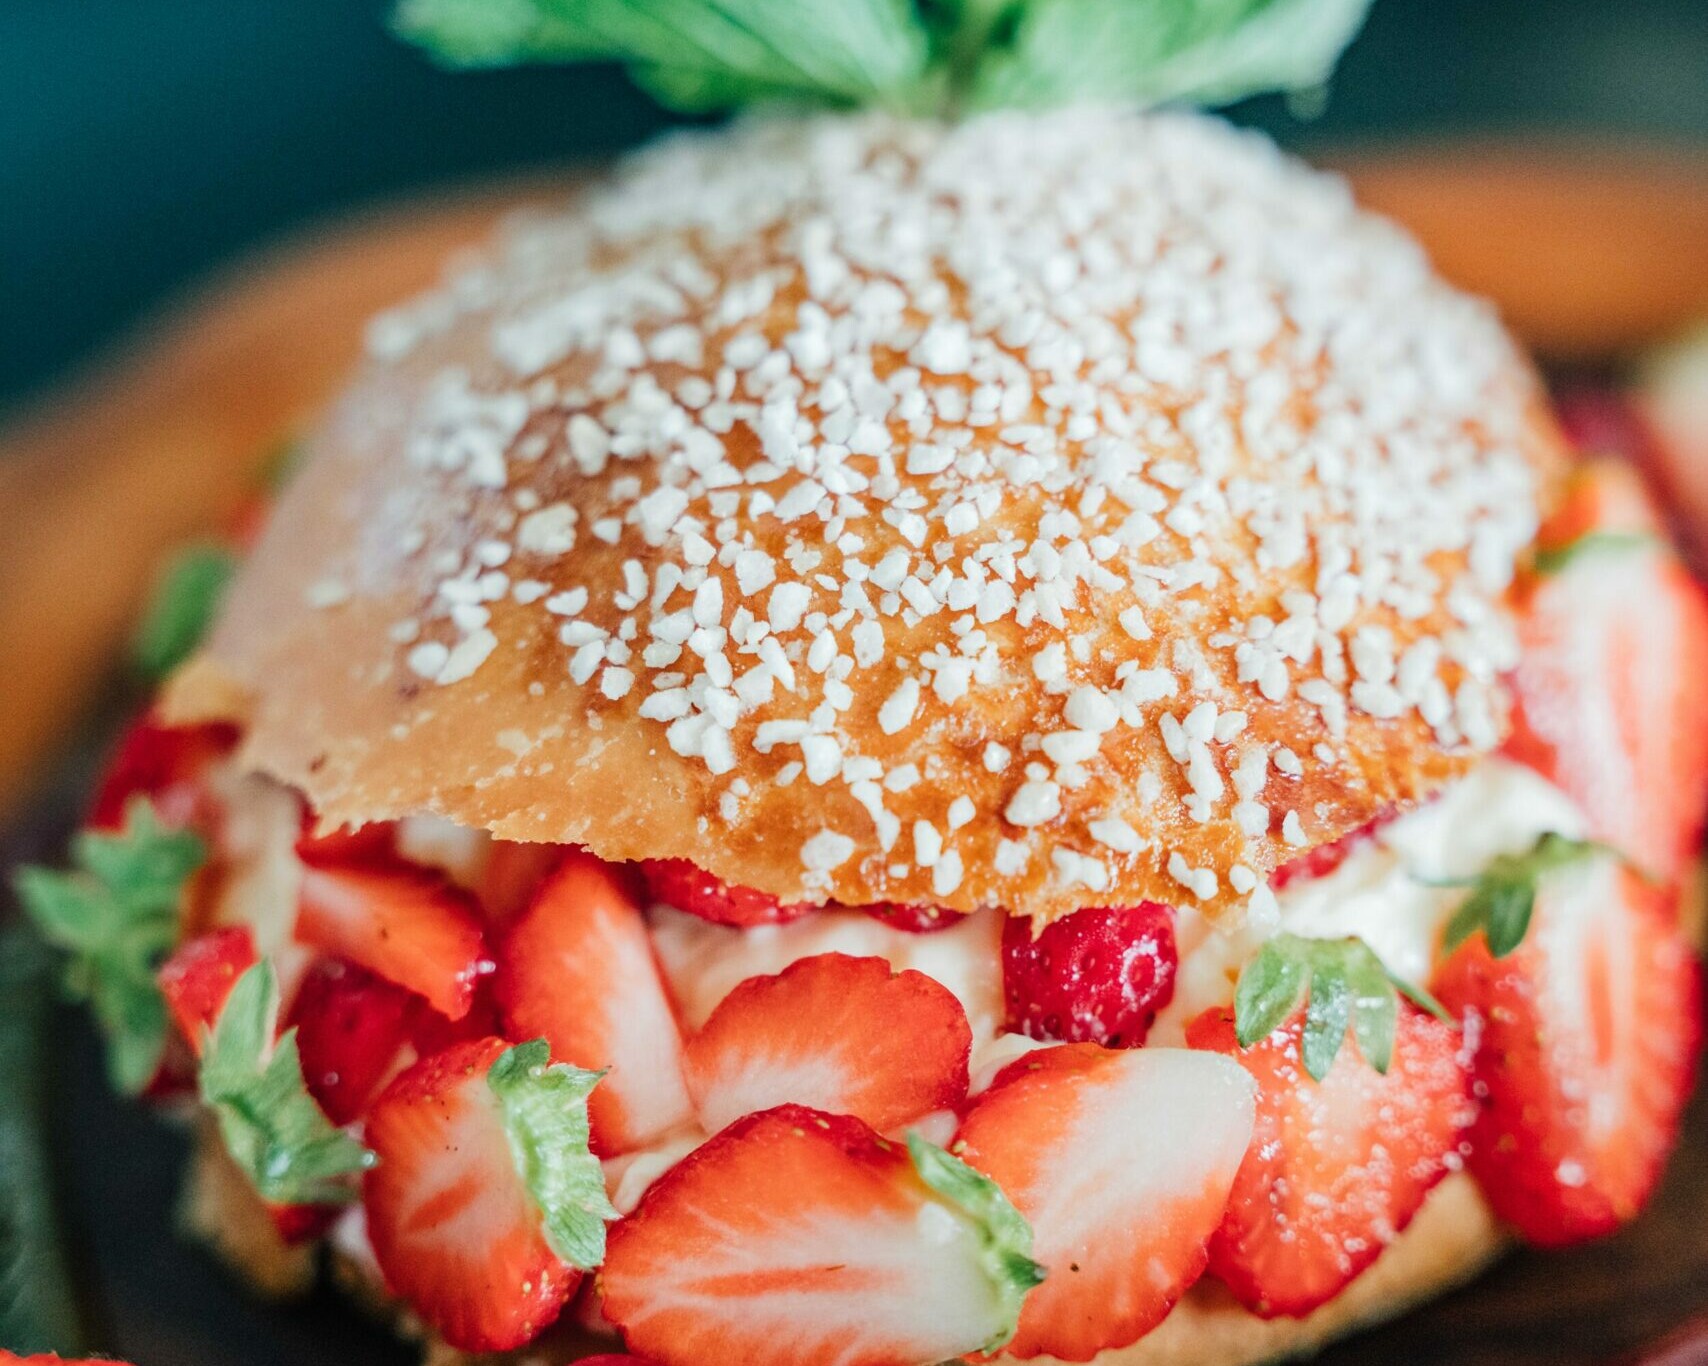 Anjuna restaurant desert with strawberries